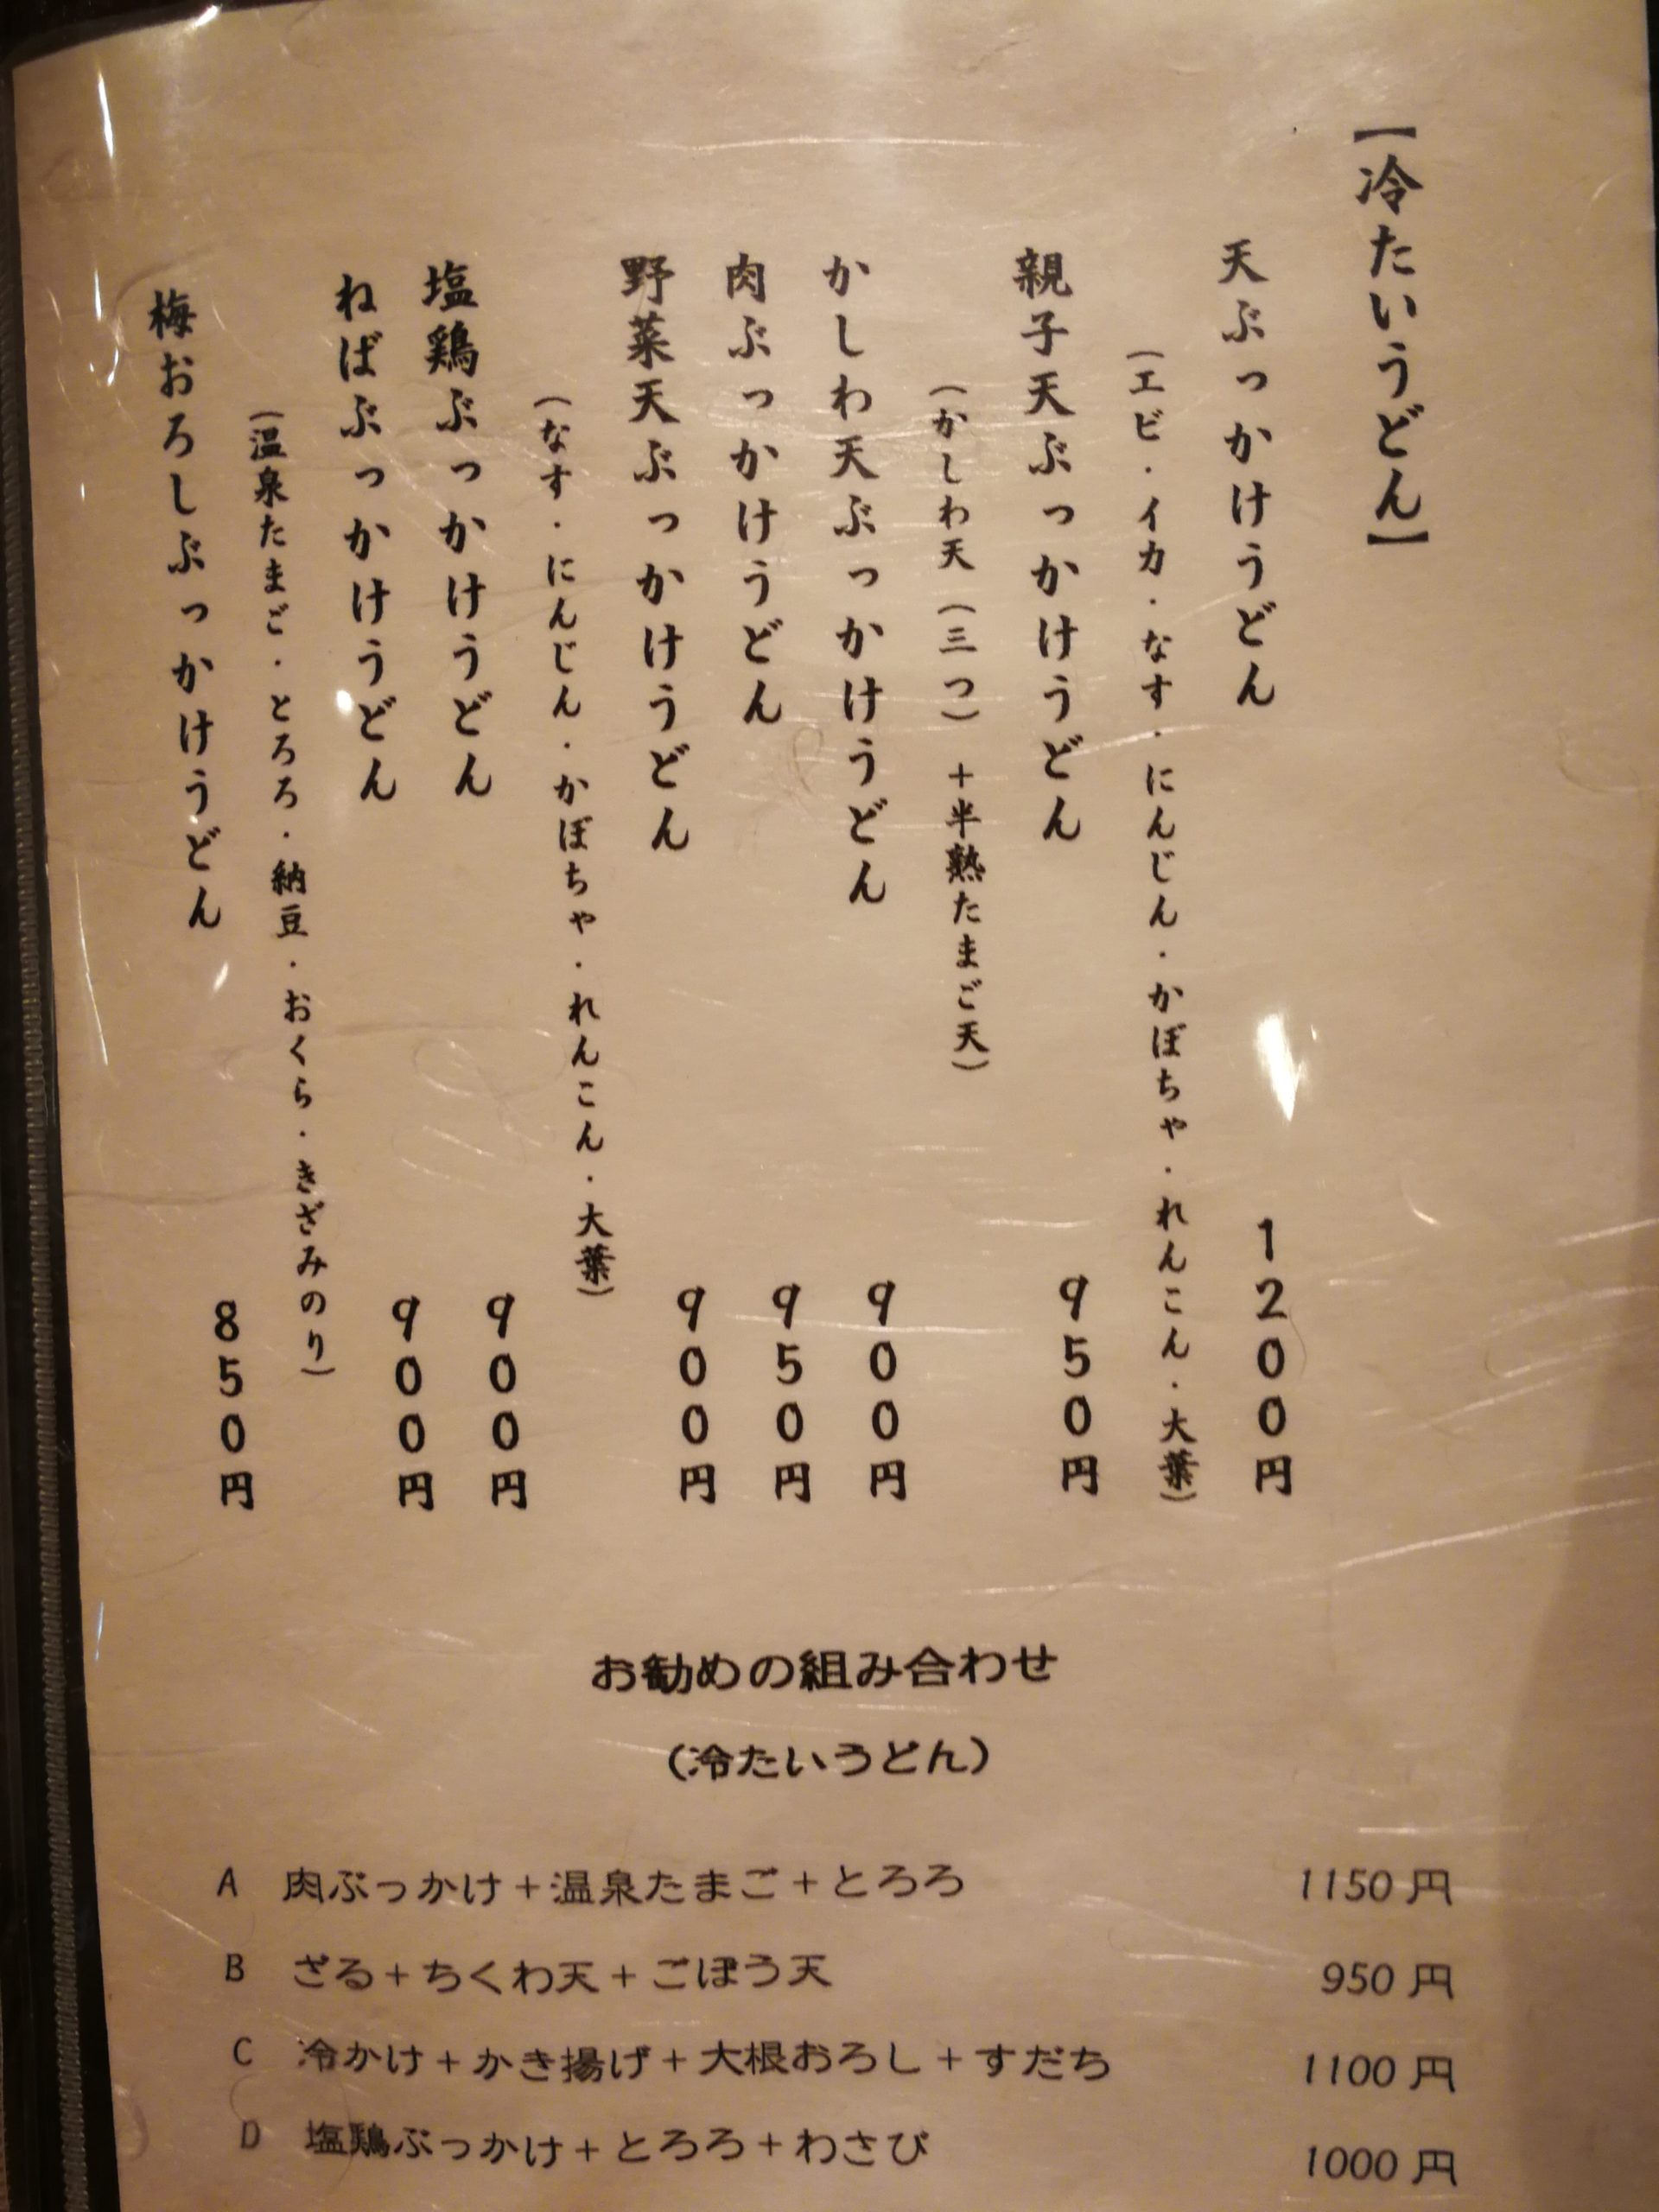 jinroku-udon-menu-01